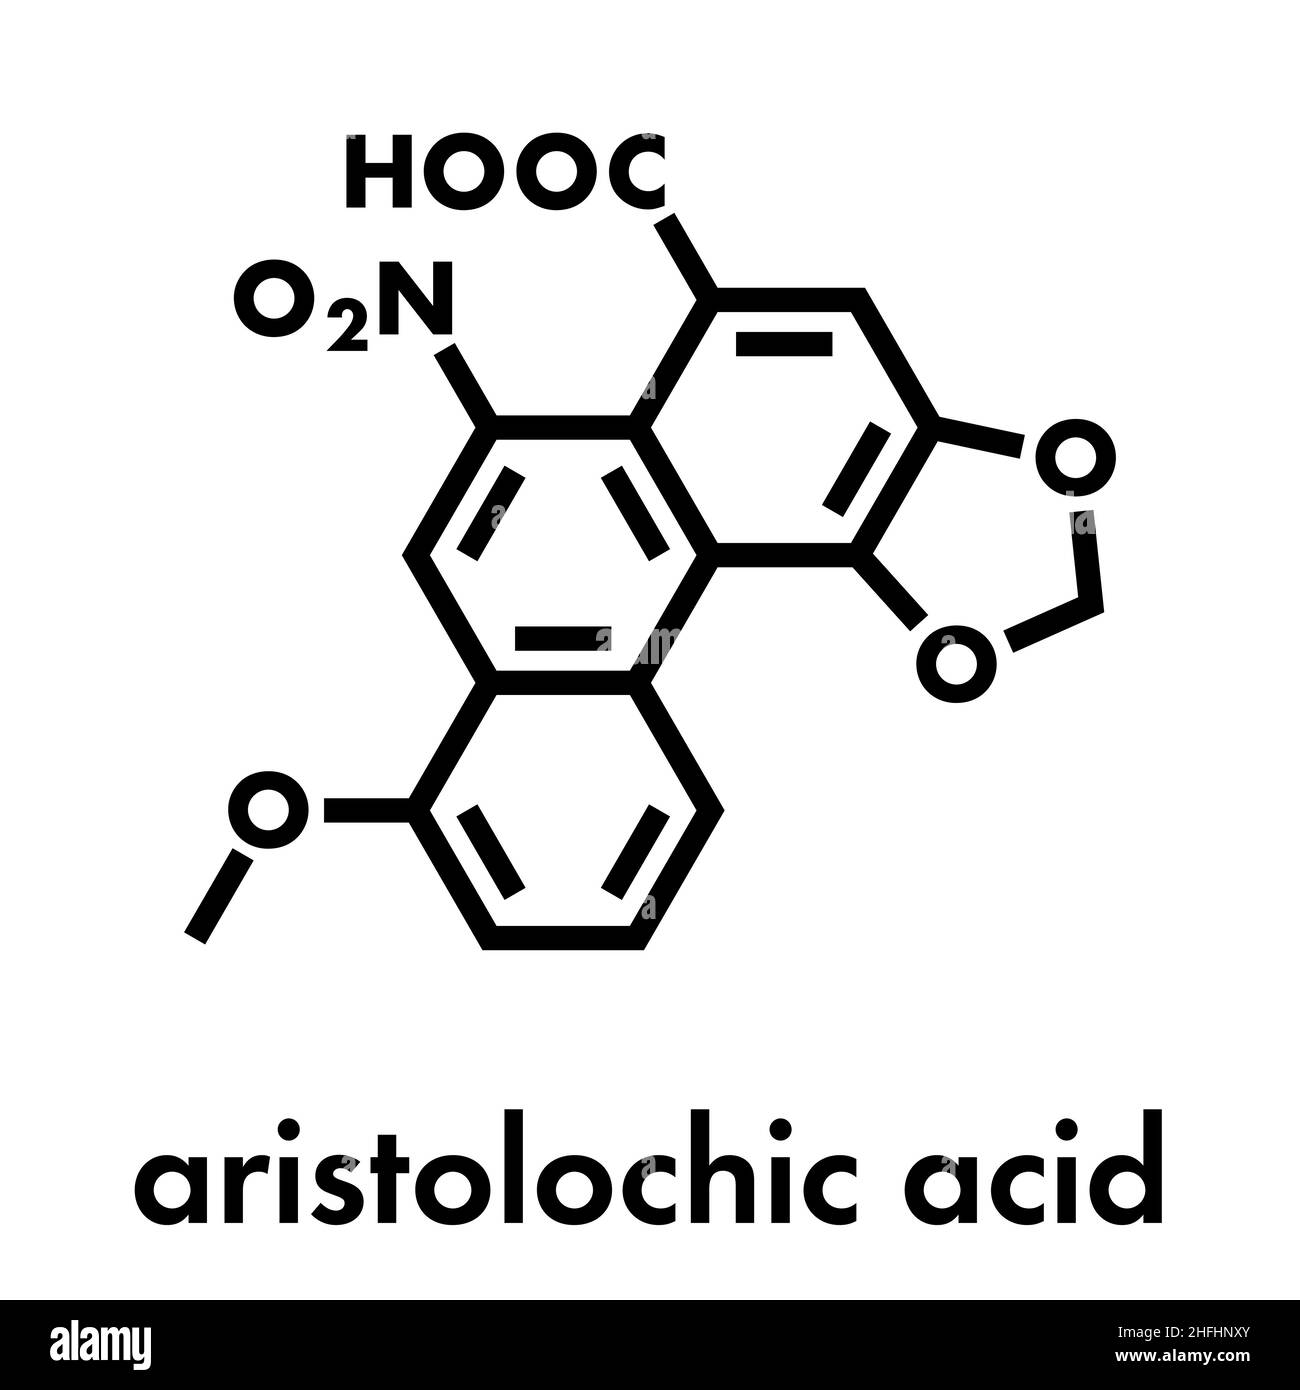 Aristolochic acid plant poison molecule. Has carcinogenic and nephrotoxic (kidney damaging) properties. Found in Aristolochia and Asarum herbs, often Stock Vector